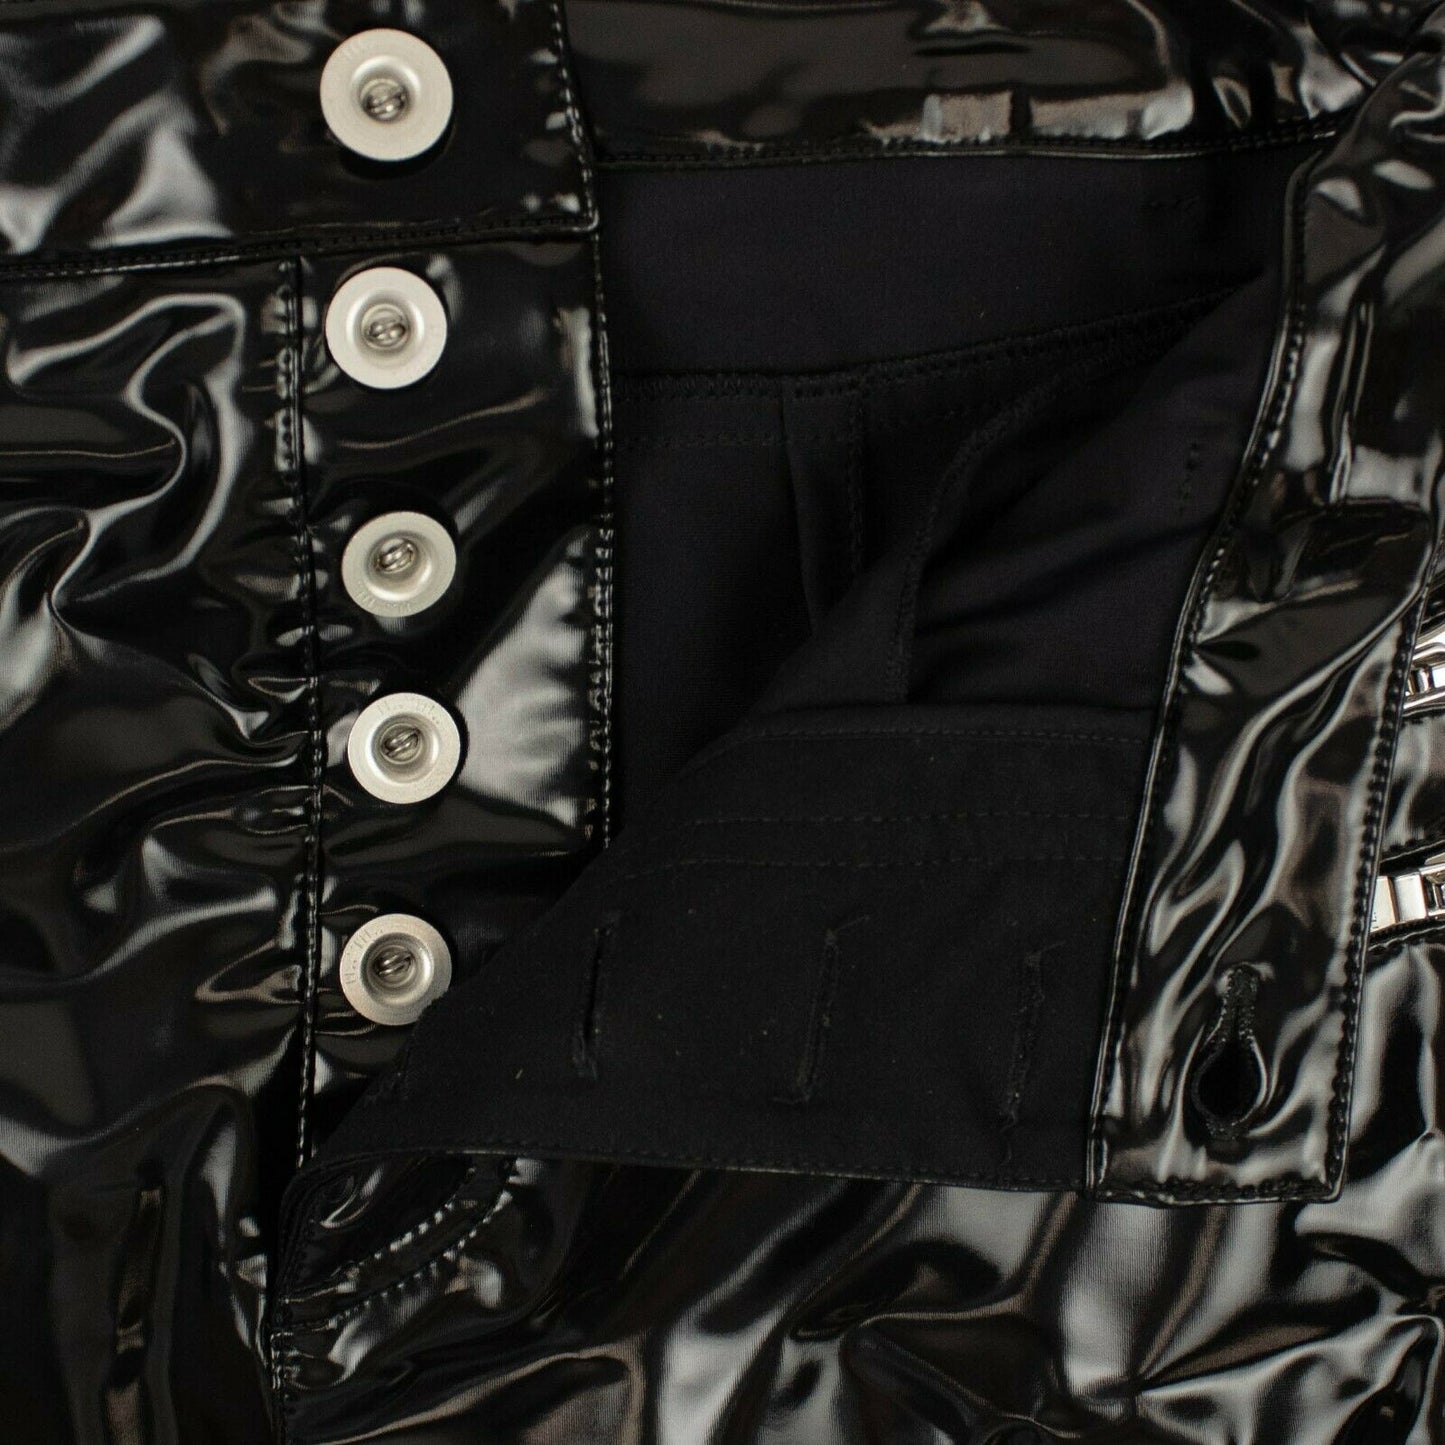 Unravel Project Faux Leather Zipper Mini-Skirt